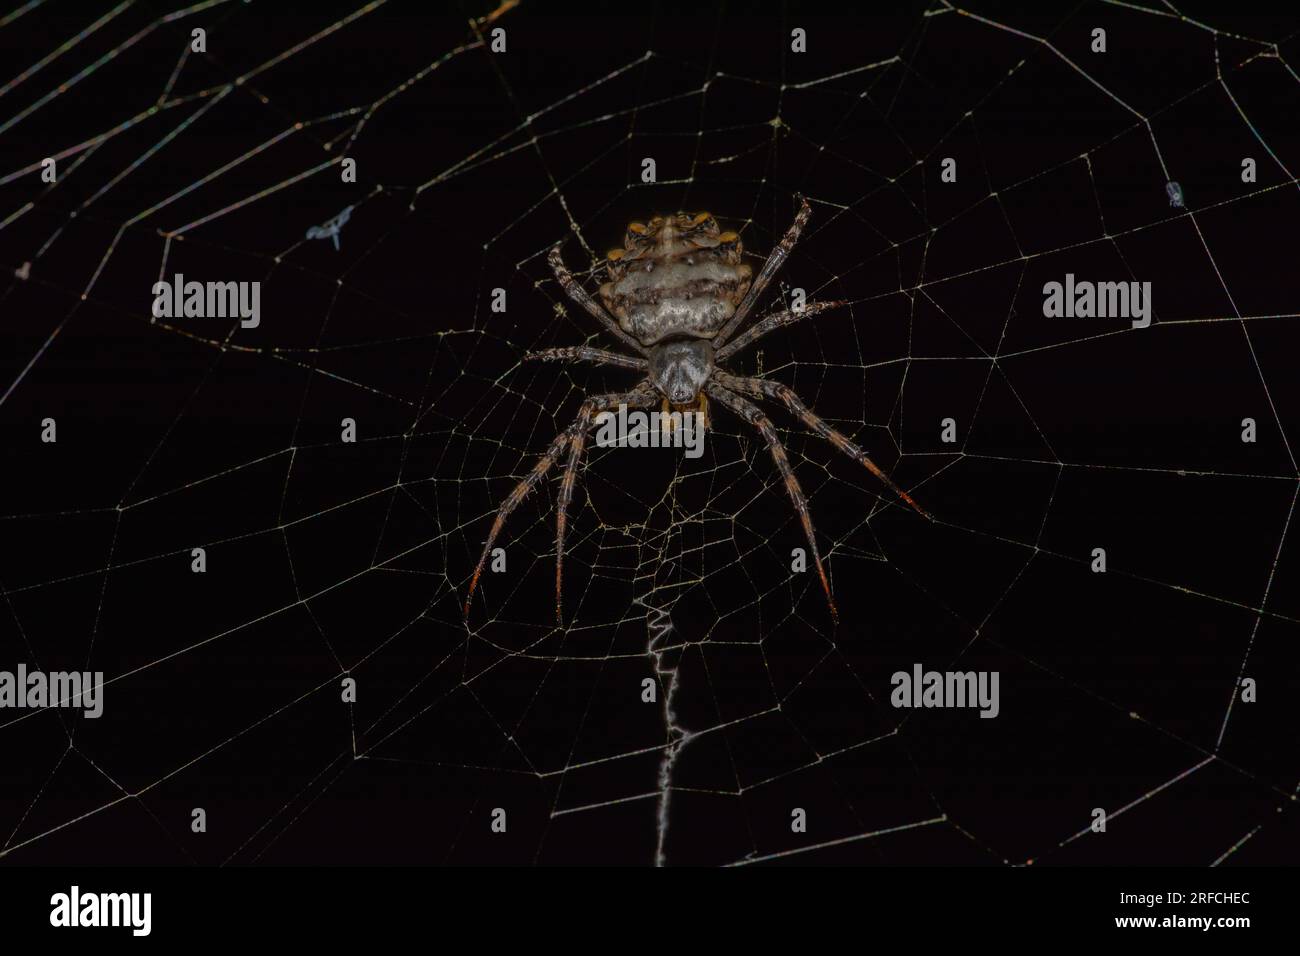 Argiope lobata spider and web Stock Photo